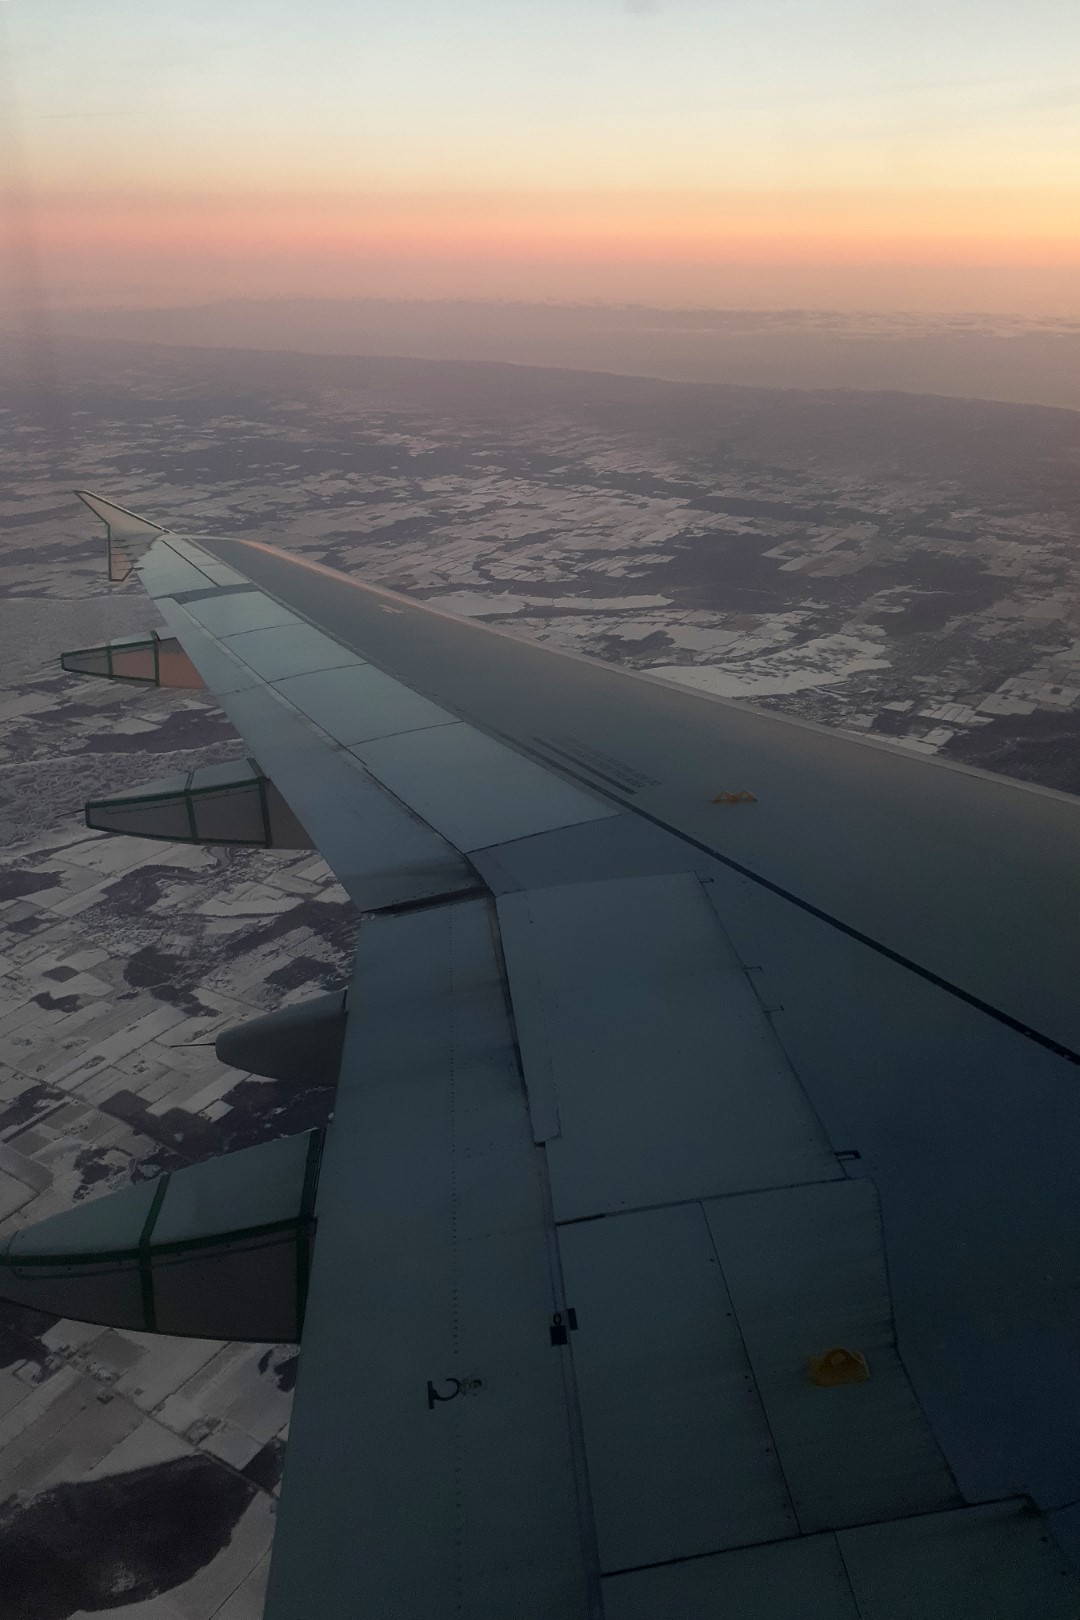 Landing in Toronto, December 17, 2020